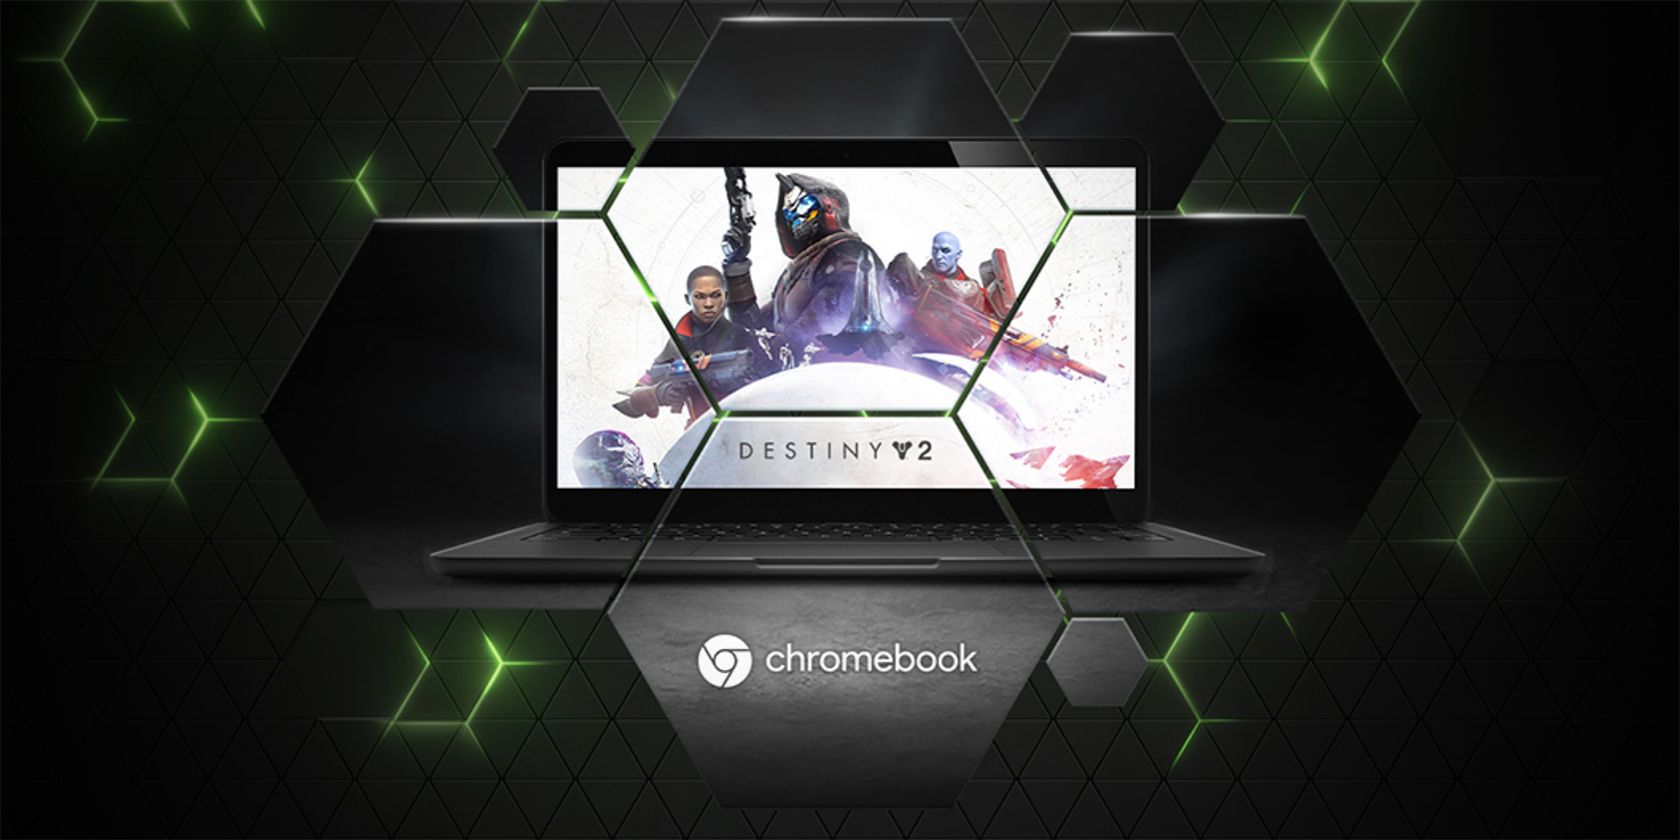 GeForce Now on Chromebook